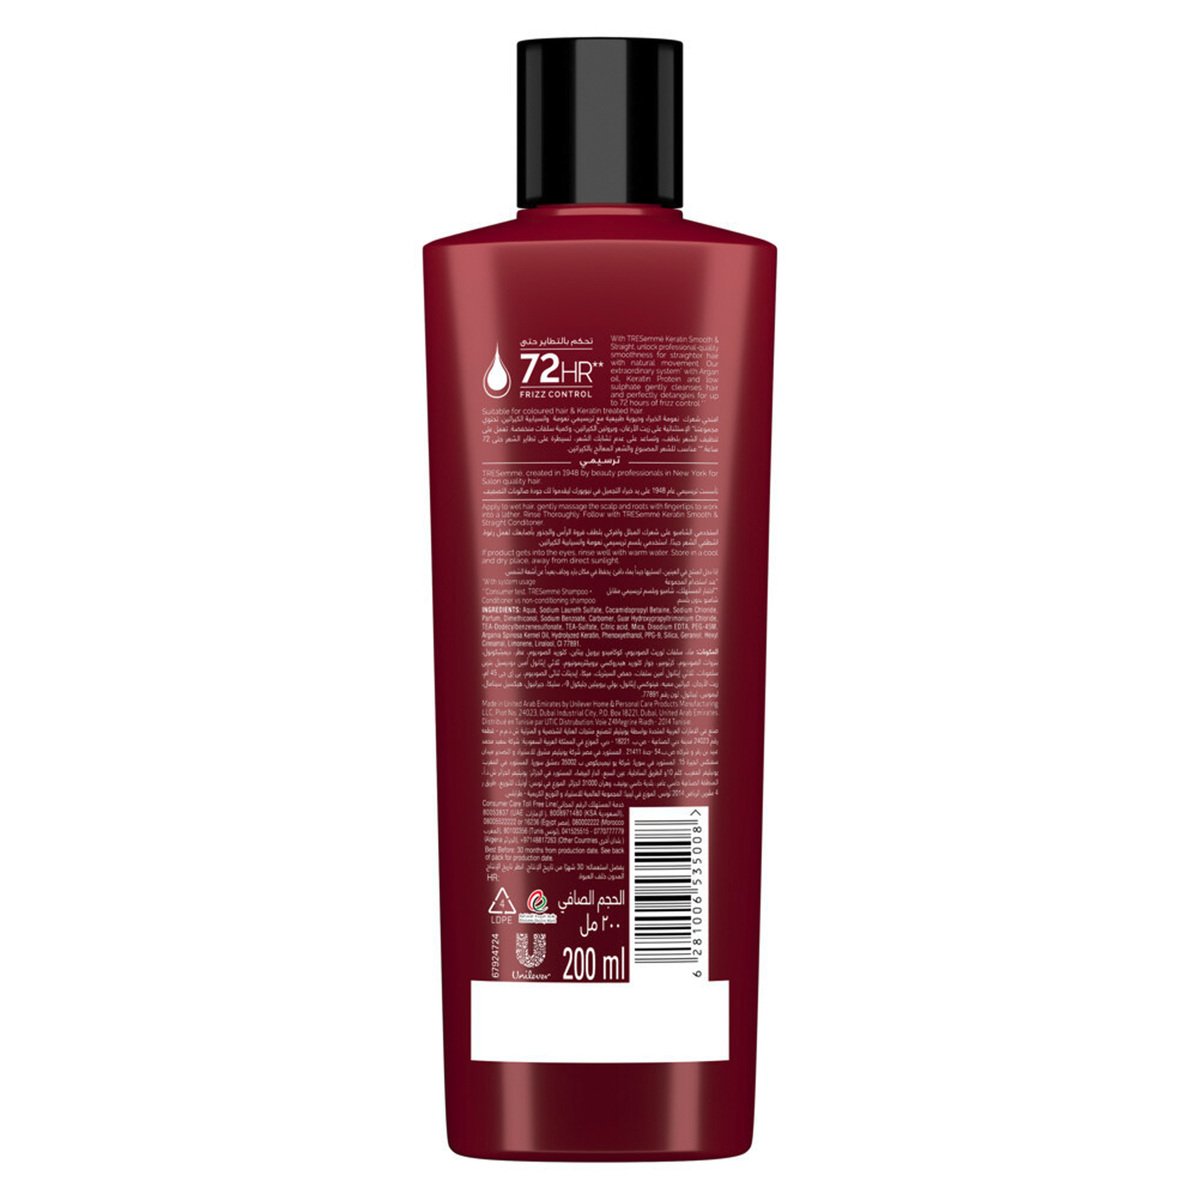 TRESemme Shampoo Keratin Smooth & Straight 200 ml